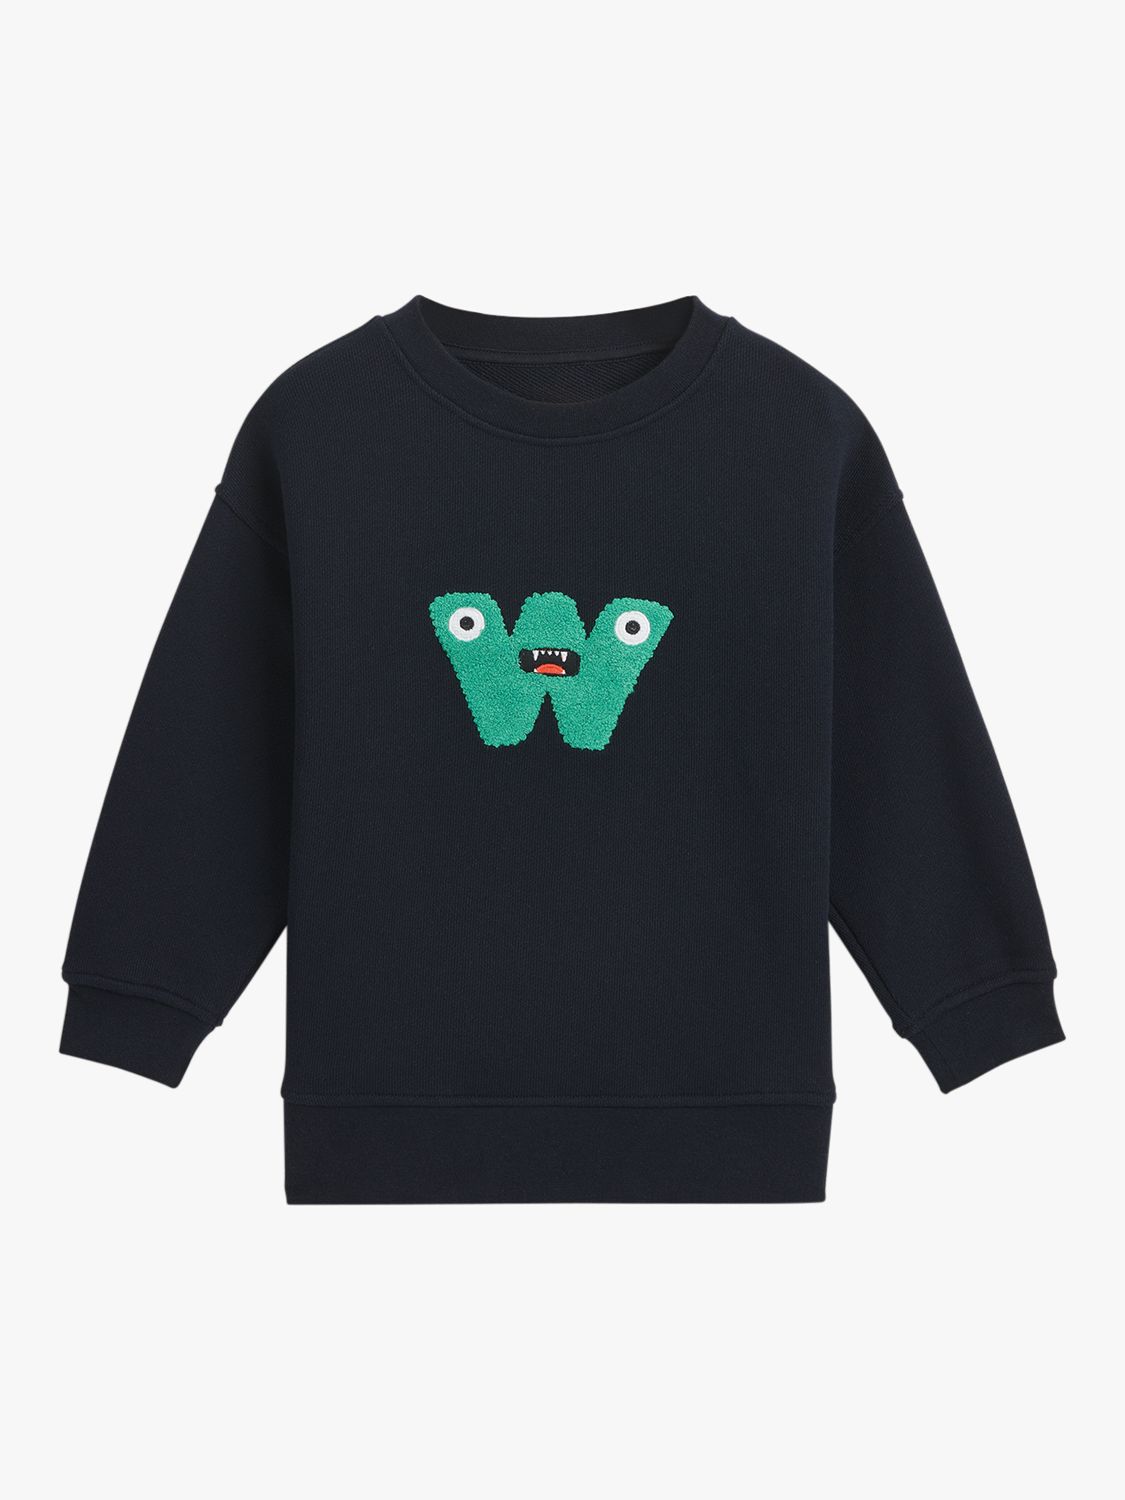 Whistles Kids' Monster Embroidered Sweatshirt, Navy, 3-4 years